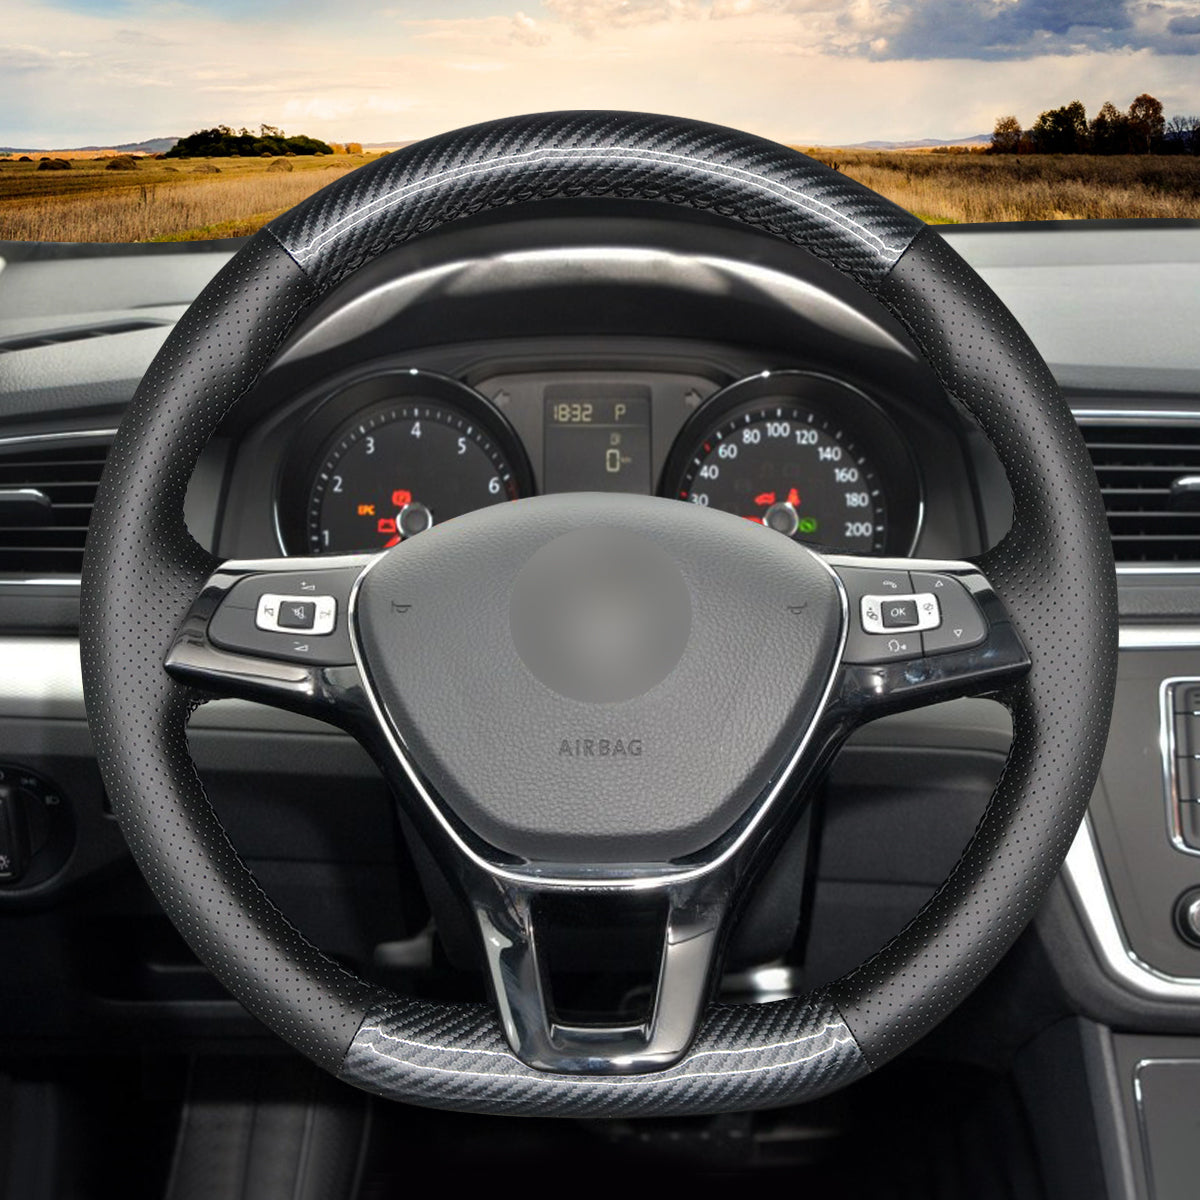 Car steering wheel cover for Volkswagen VW Golf 7 2015-2021 / Golf Alltrack 2017-2019 / Golf SportWagen 2015-2019 / Jetta 2015-2021 / Passat 2016-2020 / Tiguan 2018-2021 / e-Golf 2015-2019 / Arteon 2019-2020 / Atlas 2018-2019